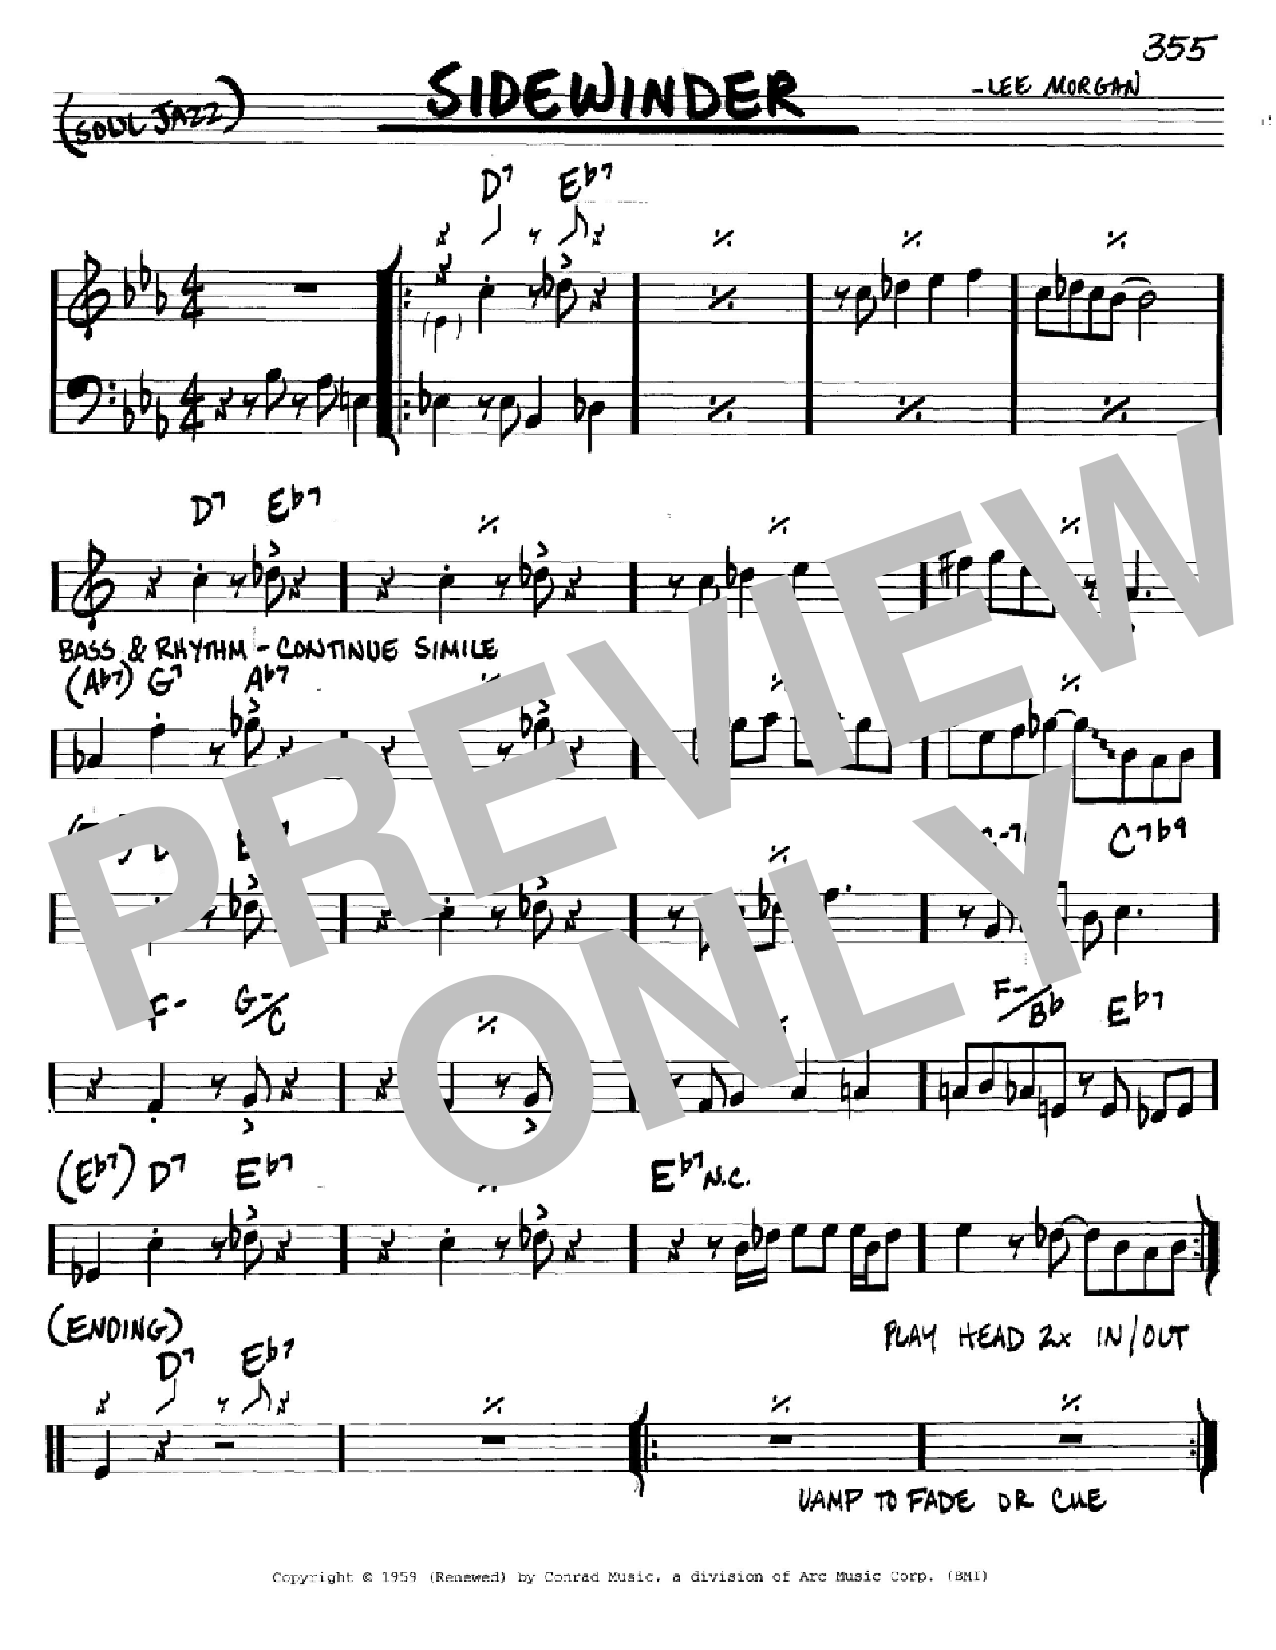 Lee Morgan Sidewinder sheet music notes and chords. Download Printable PDF.